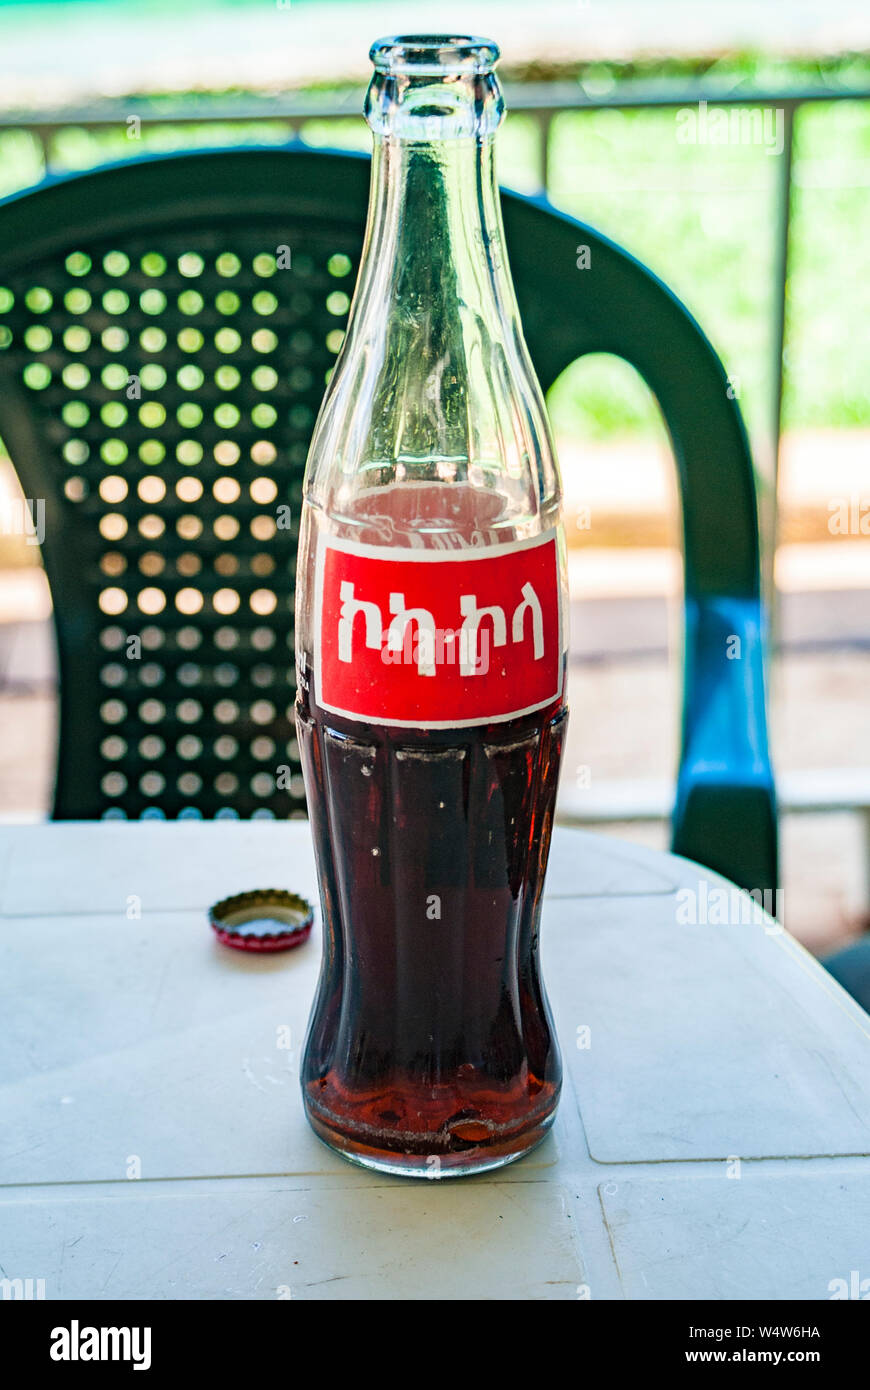 Coca Cola bottle with Amharic script label in Ethiopia Stock Photo